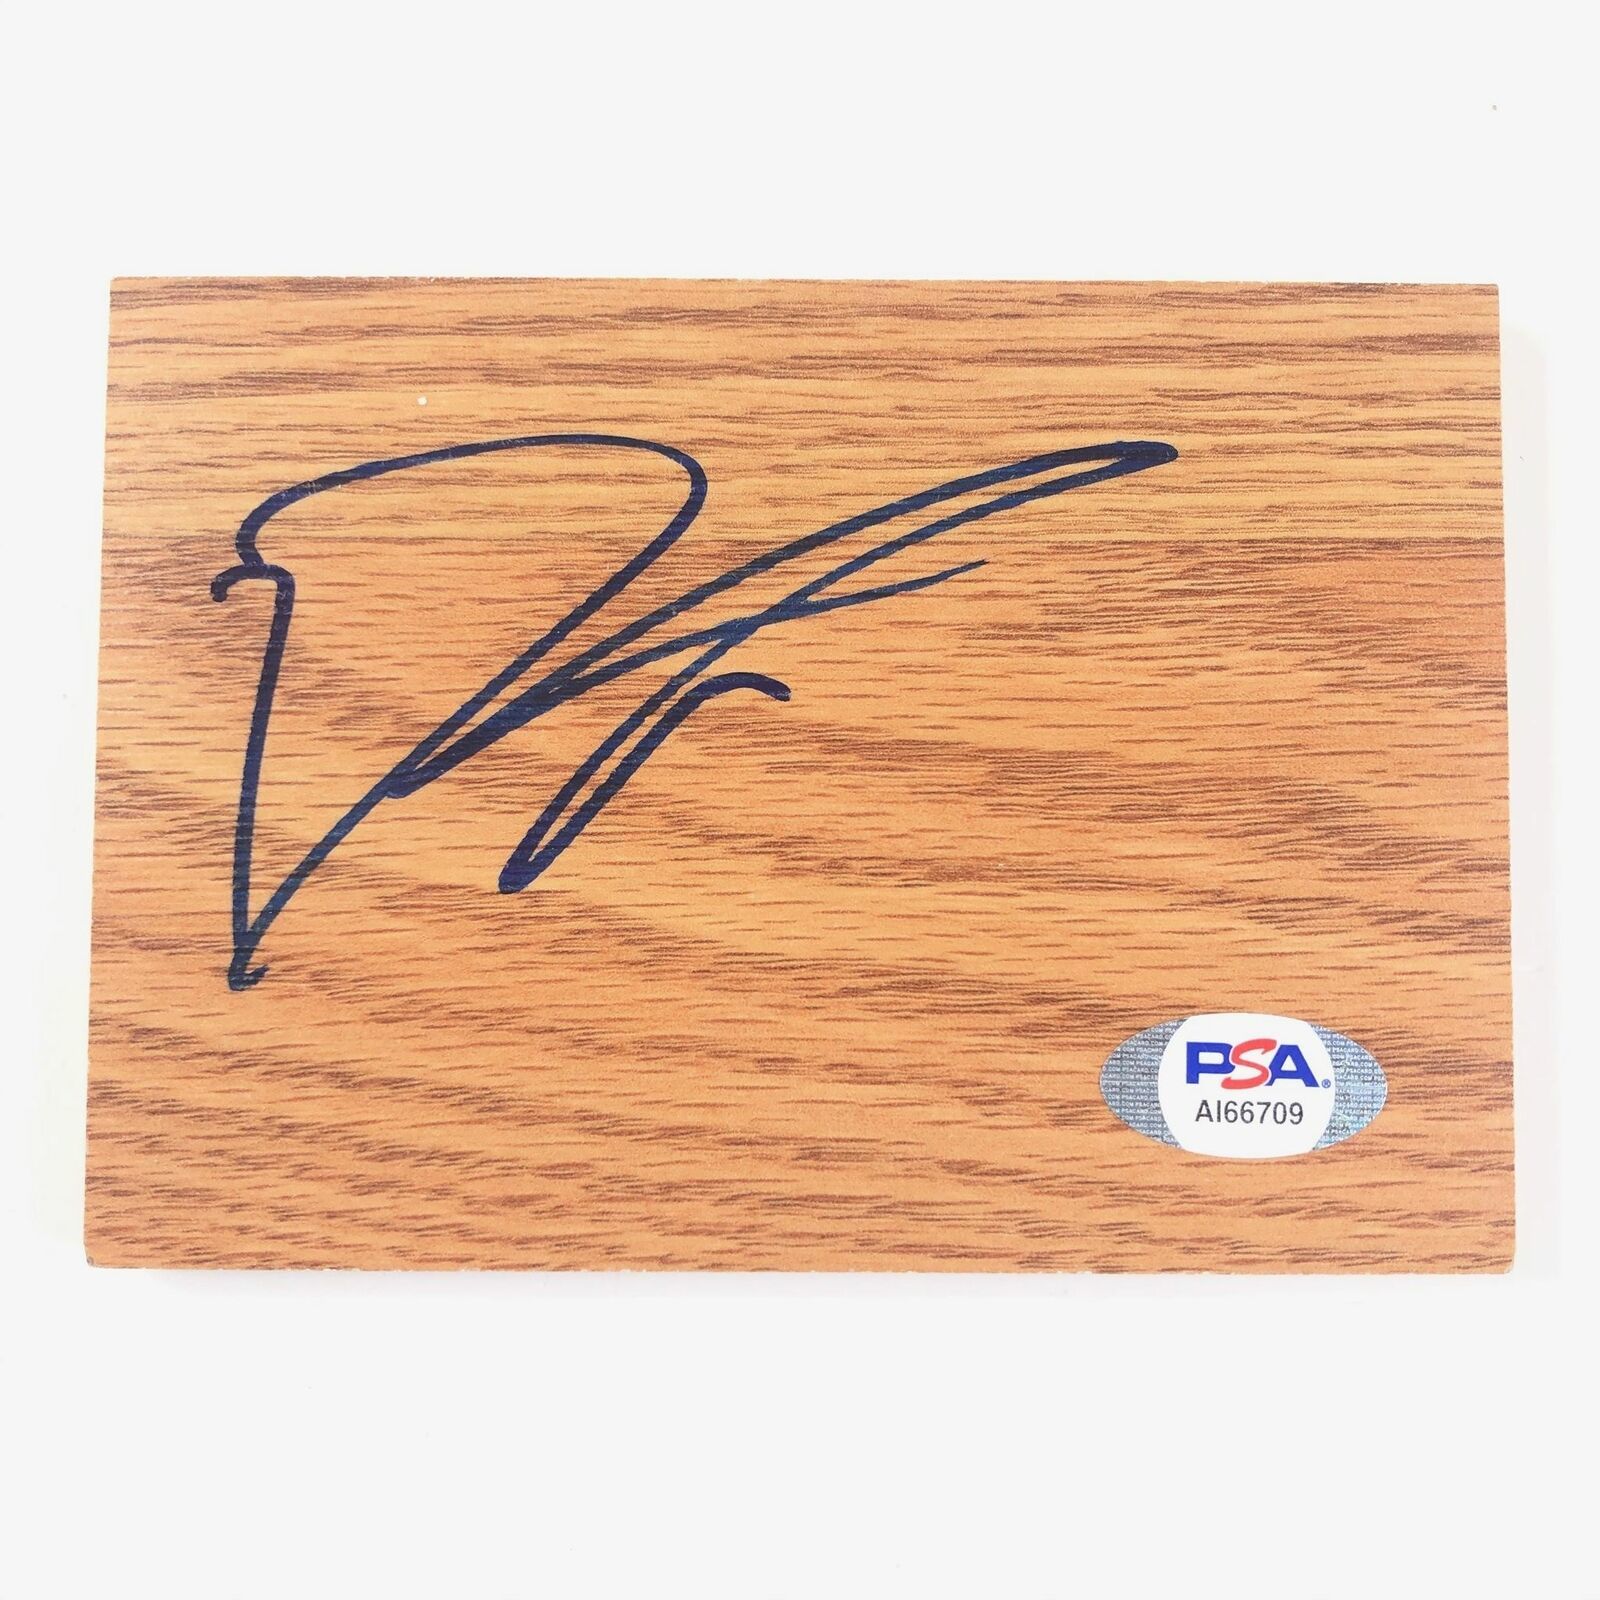 Primary image for Dennis Smith Jr. Signed Floorboard PSA/DNA Detroit Pistons Autographed